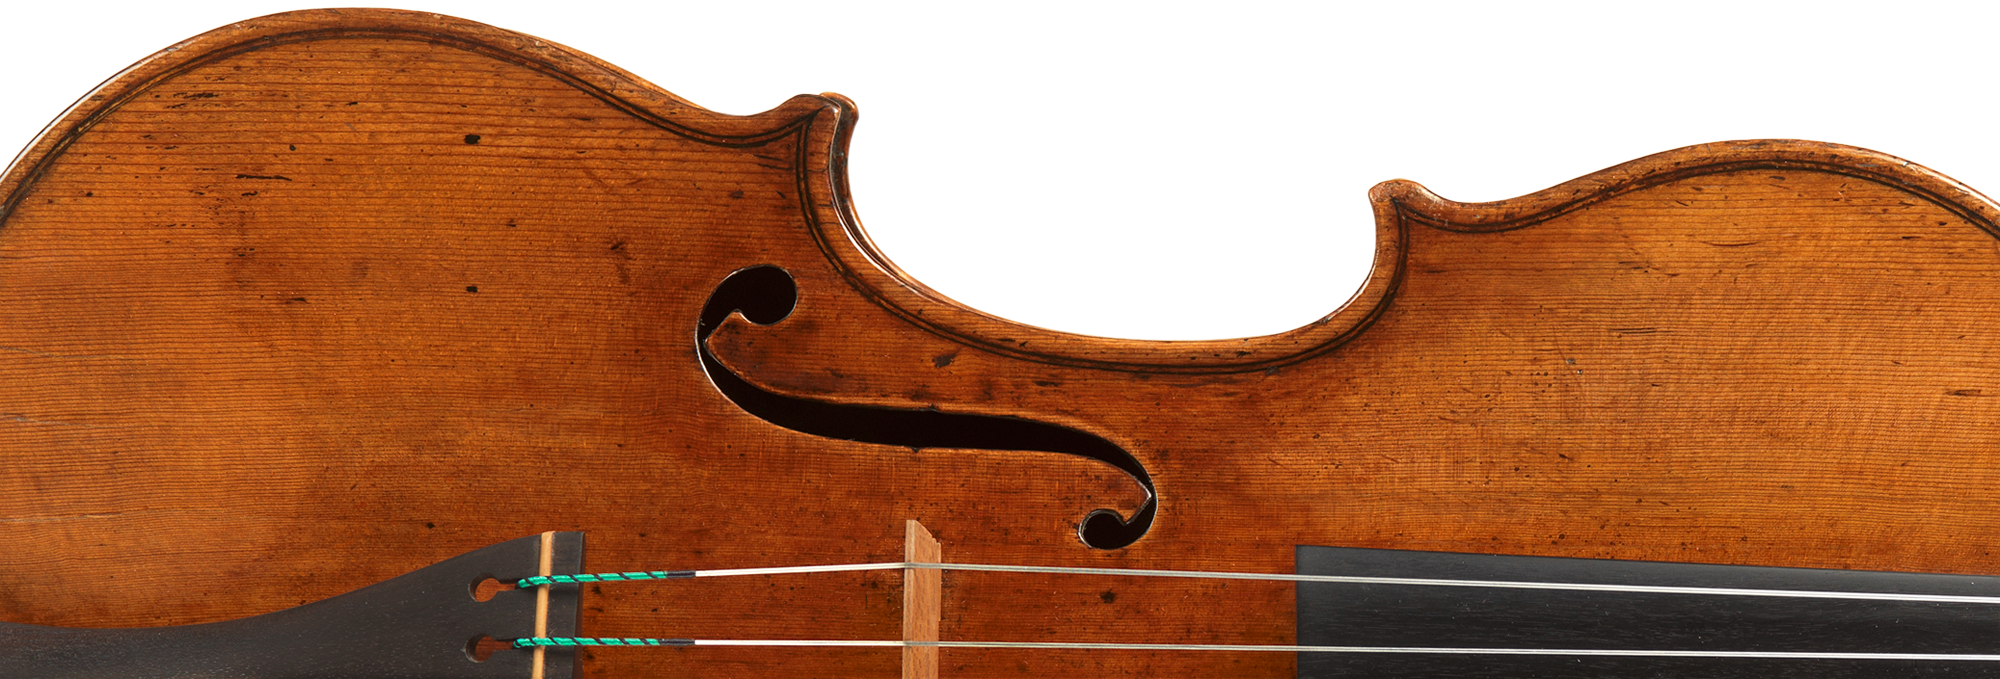 S1706-Stradivari Straus